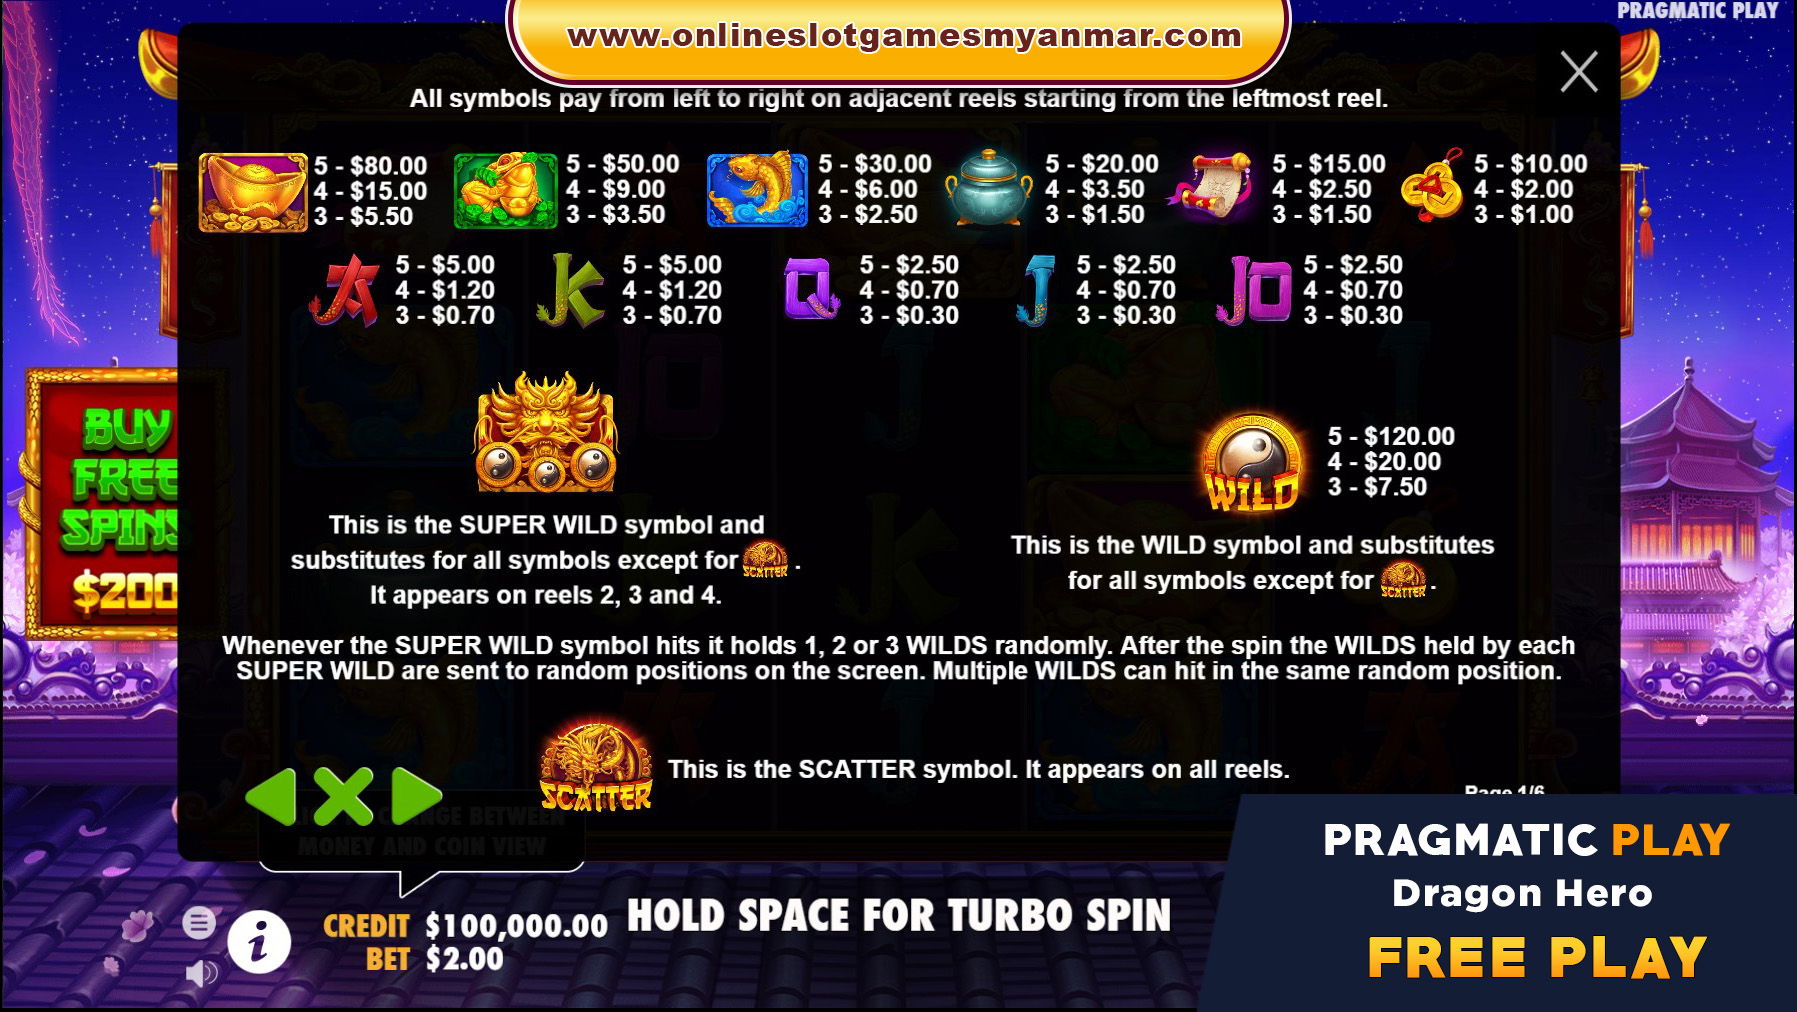 Pragmatic Play Slot Game - Dragon Hero Payout